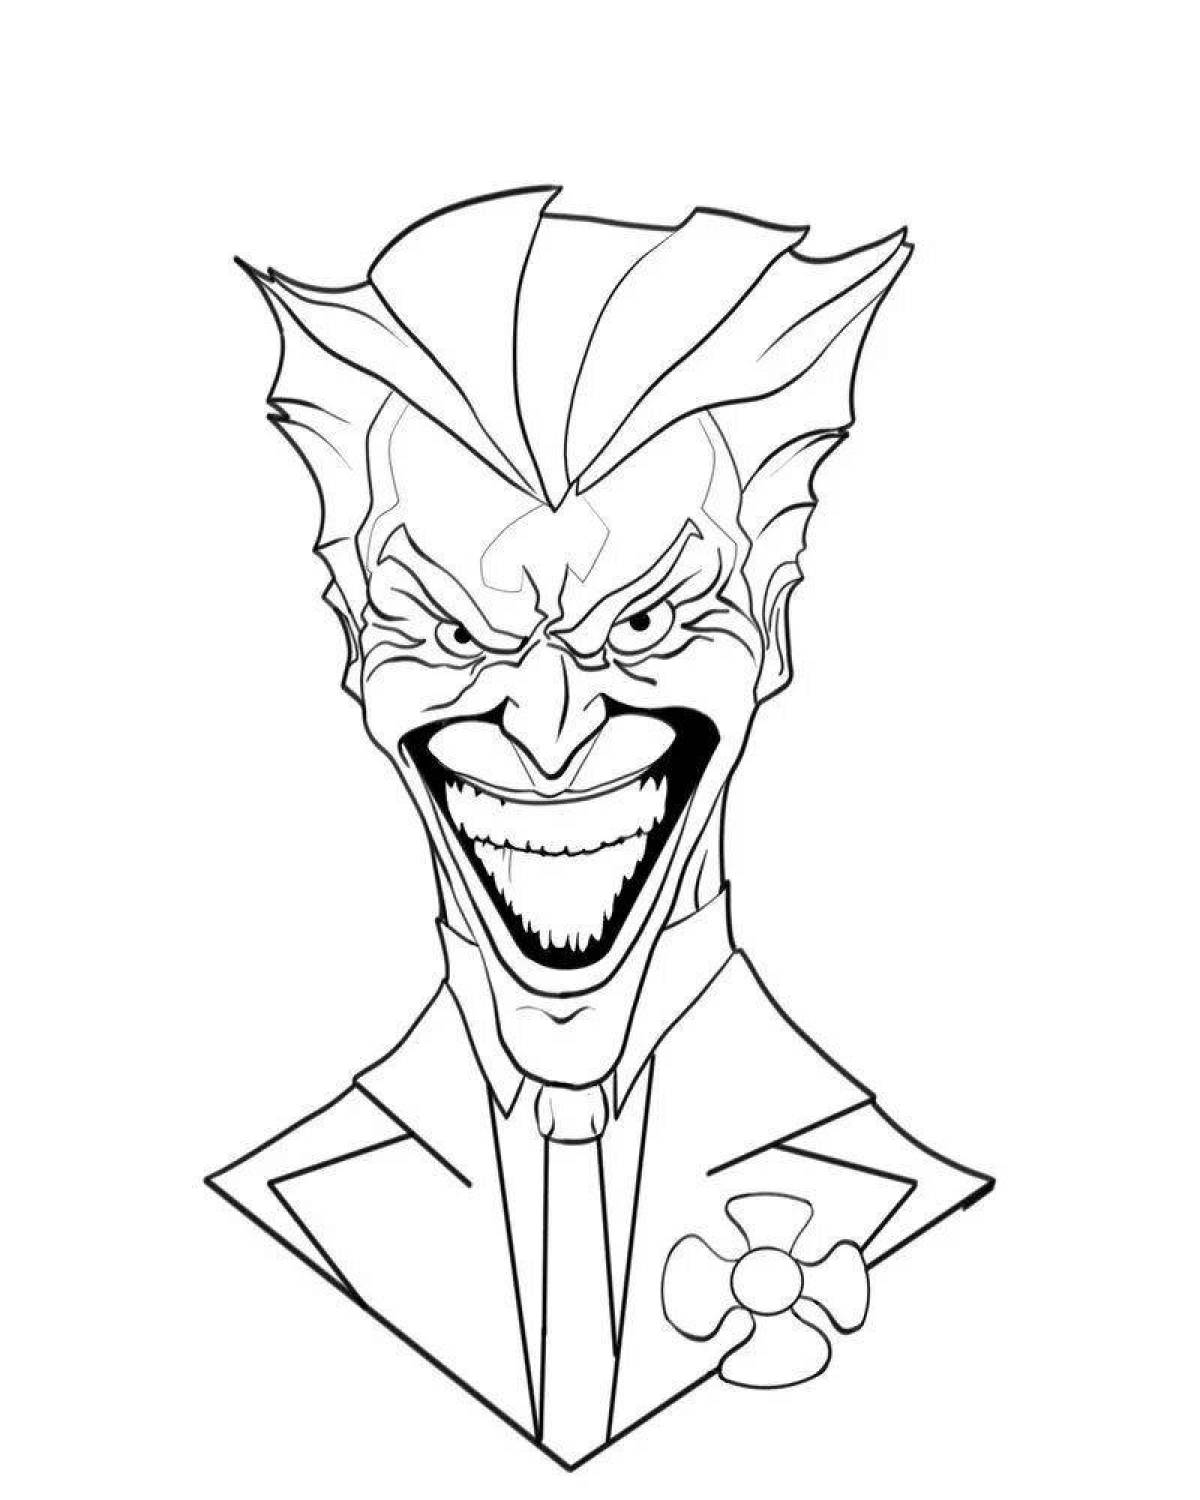 Fun joker face coloring page